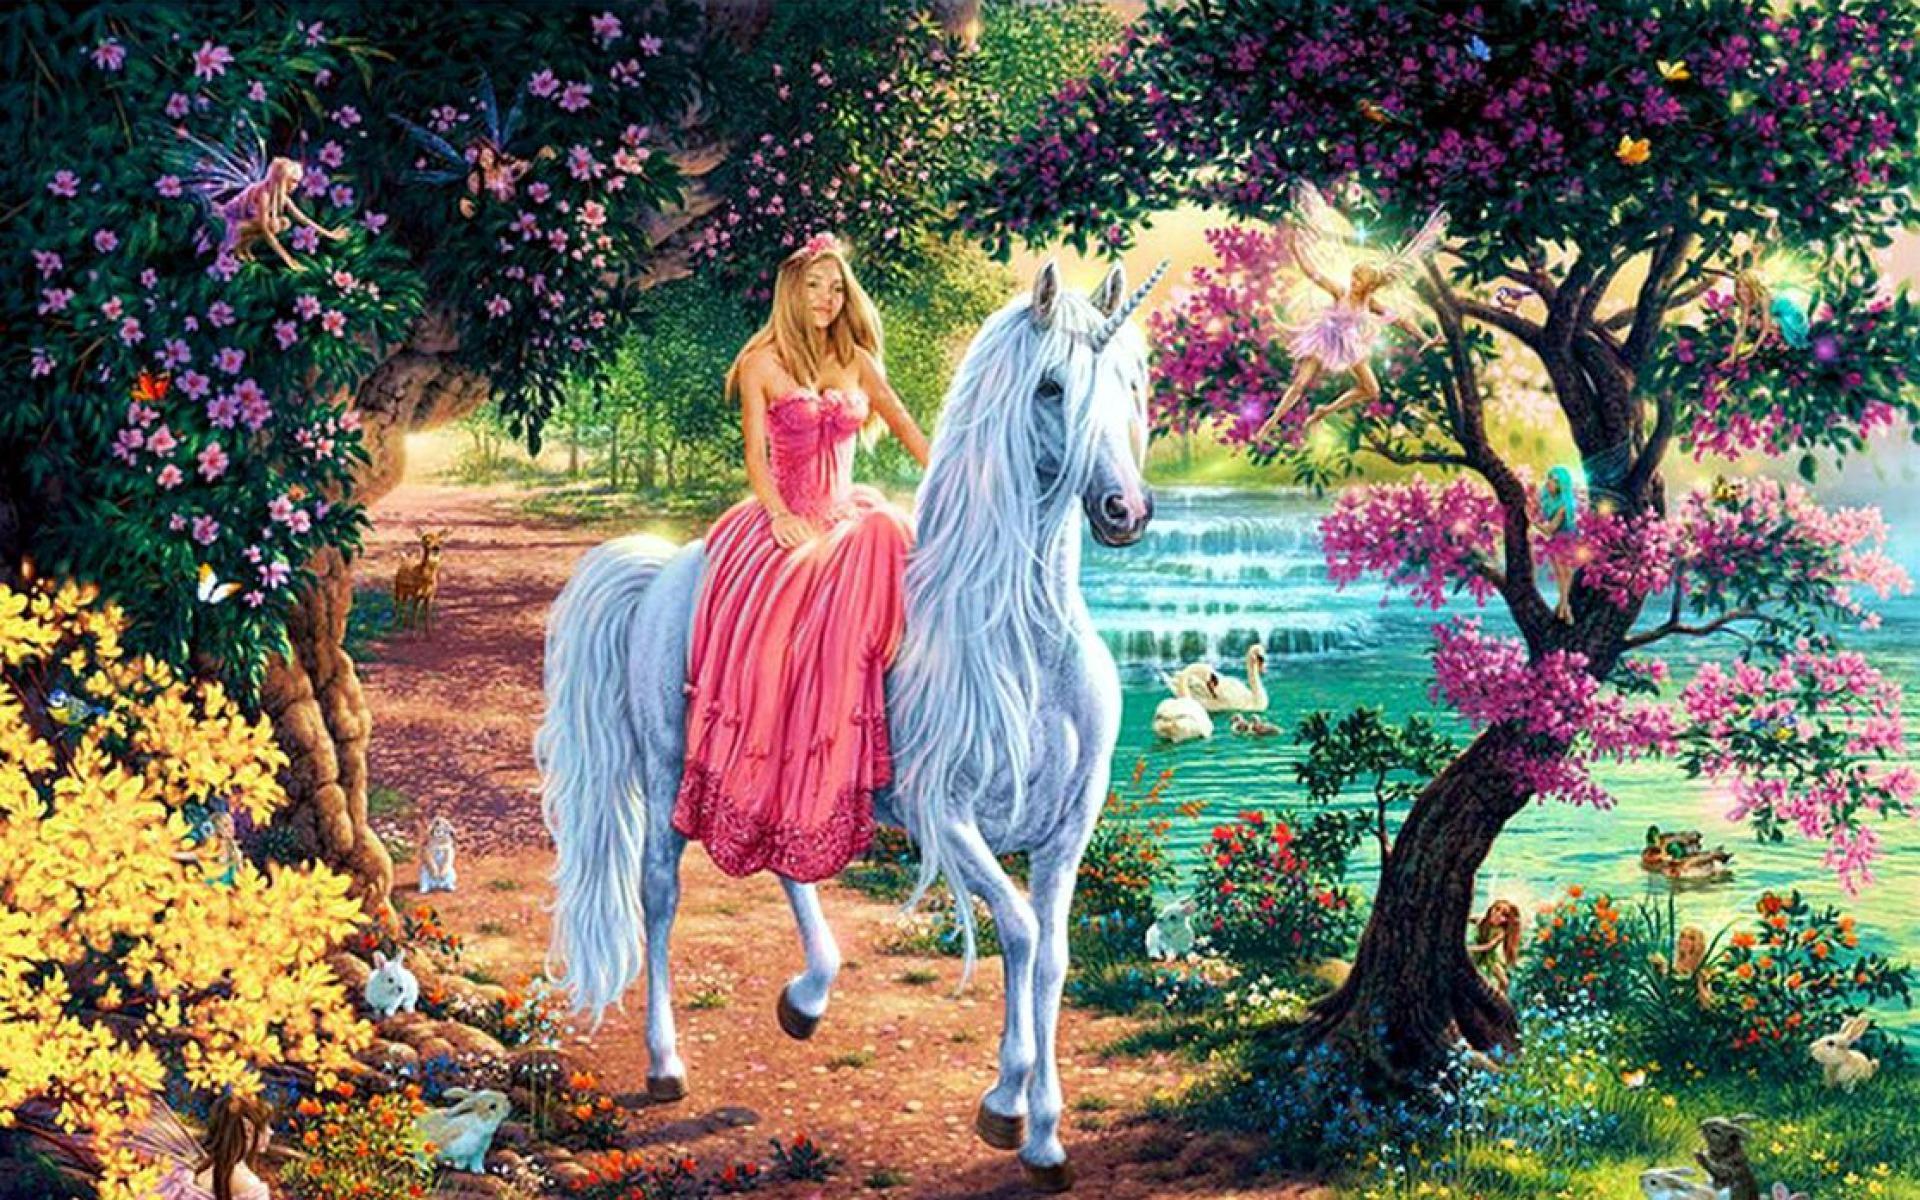 Unicorn HD Wallpaper